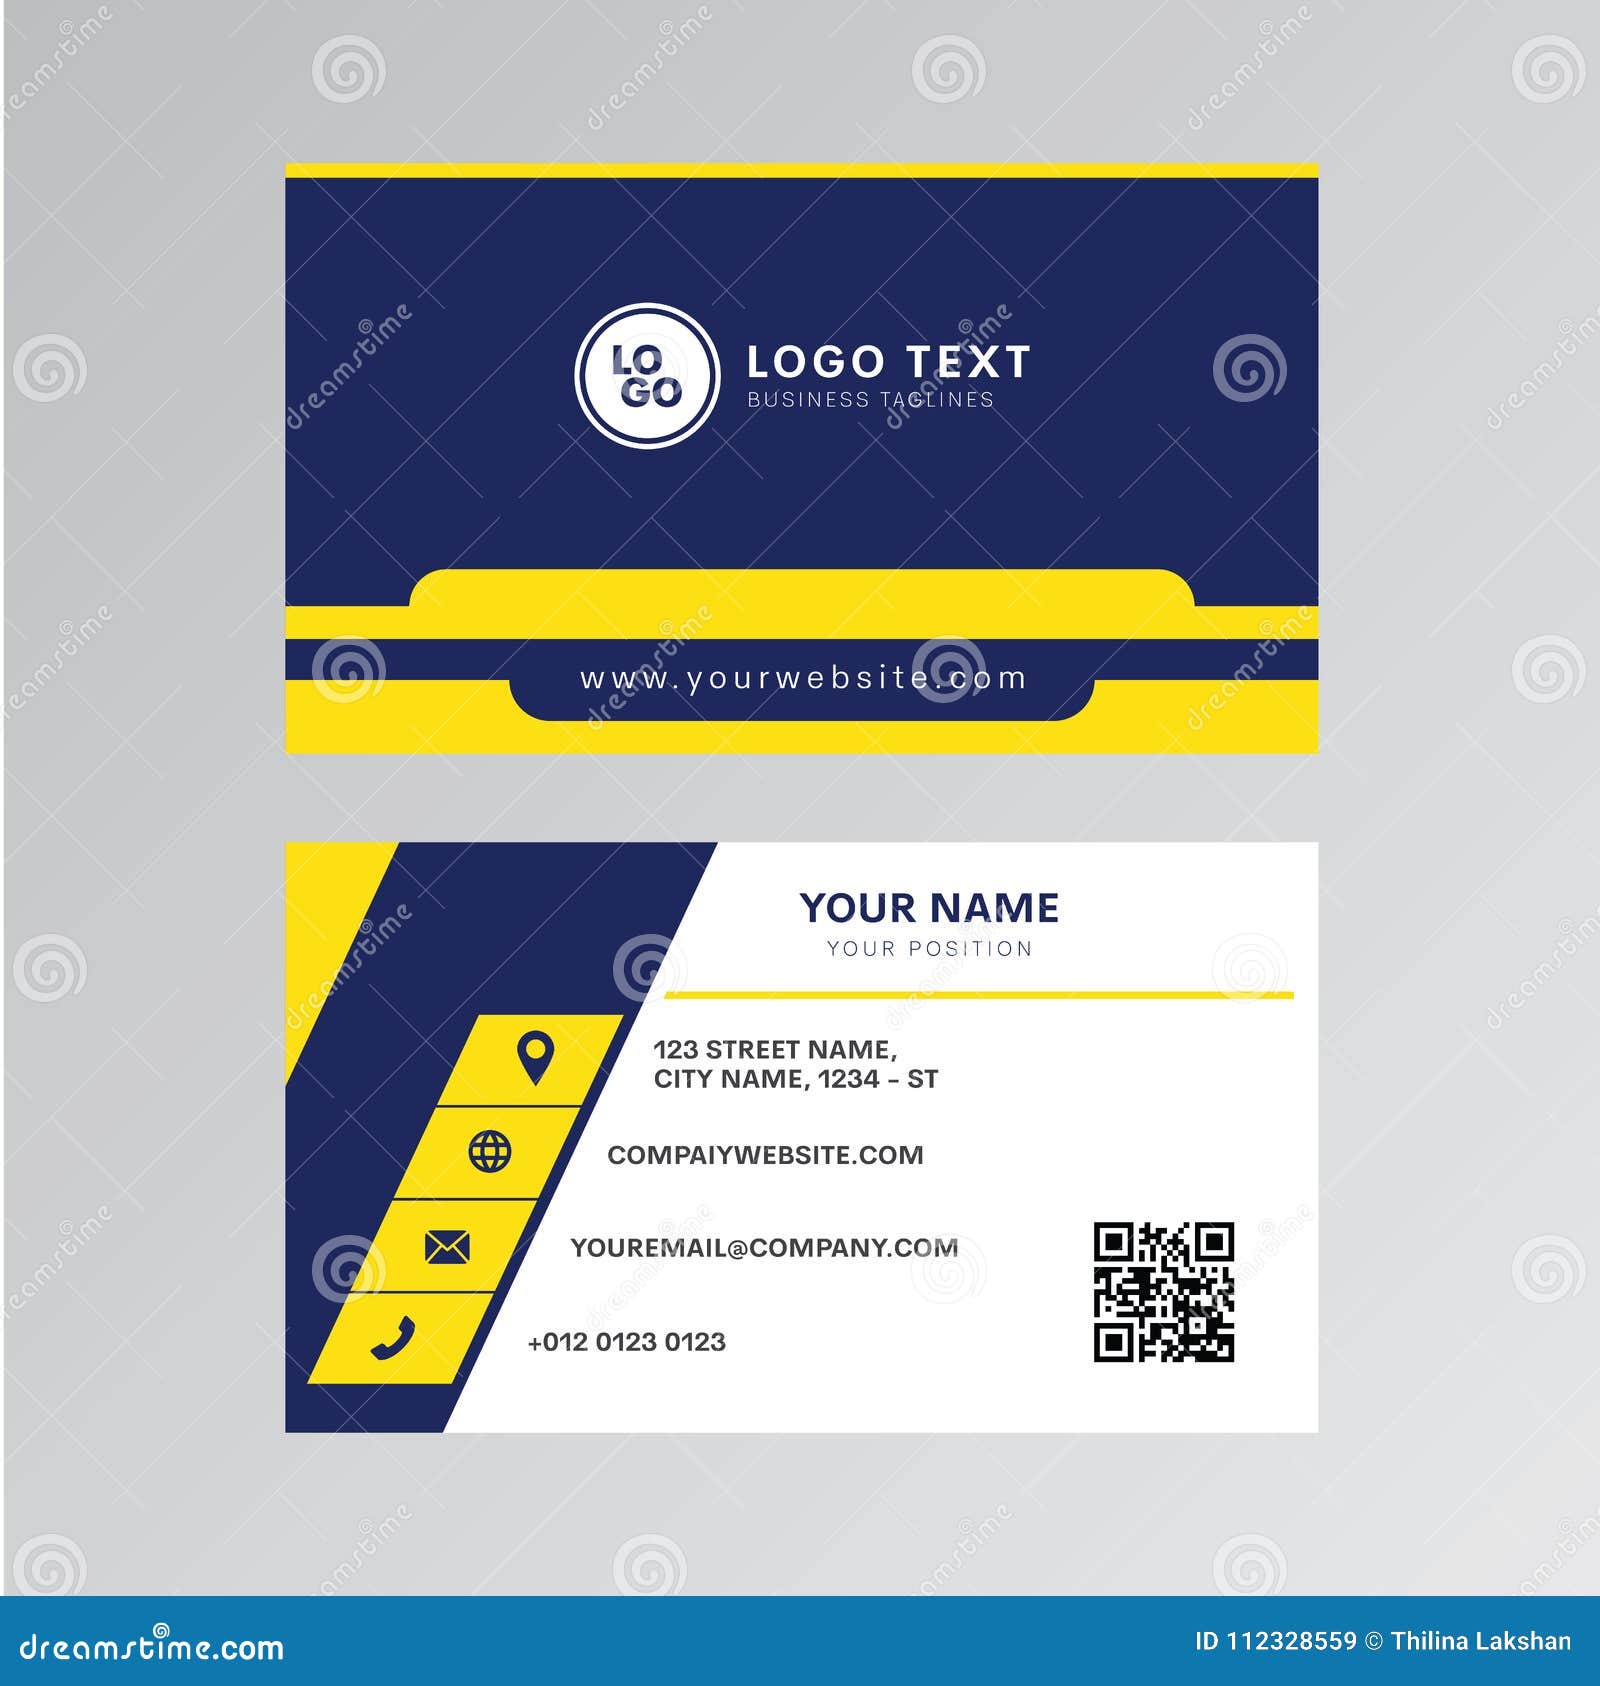 Professional Business Card Vector Design, Invitation Card Template With Regard To Seminar Invitation Card Template